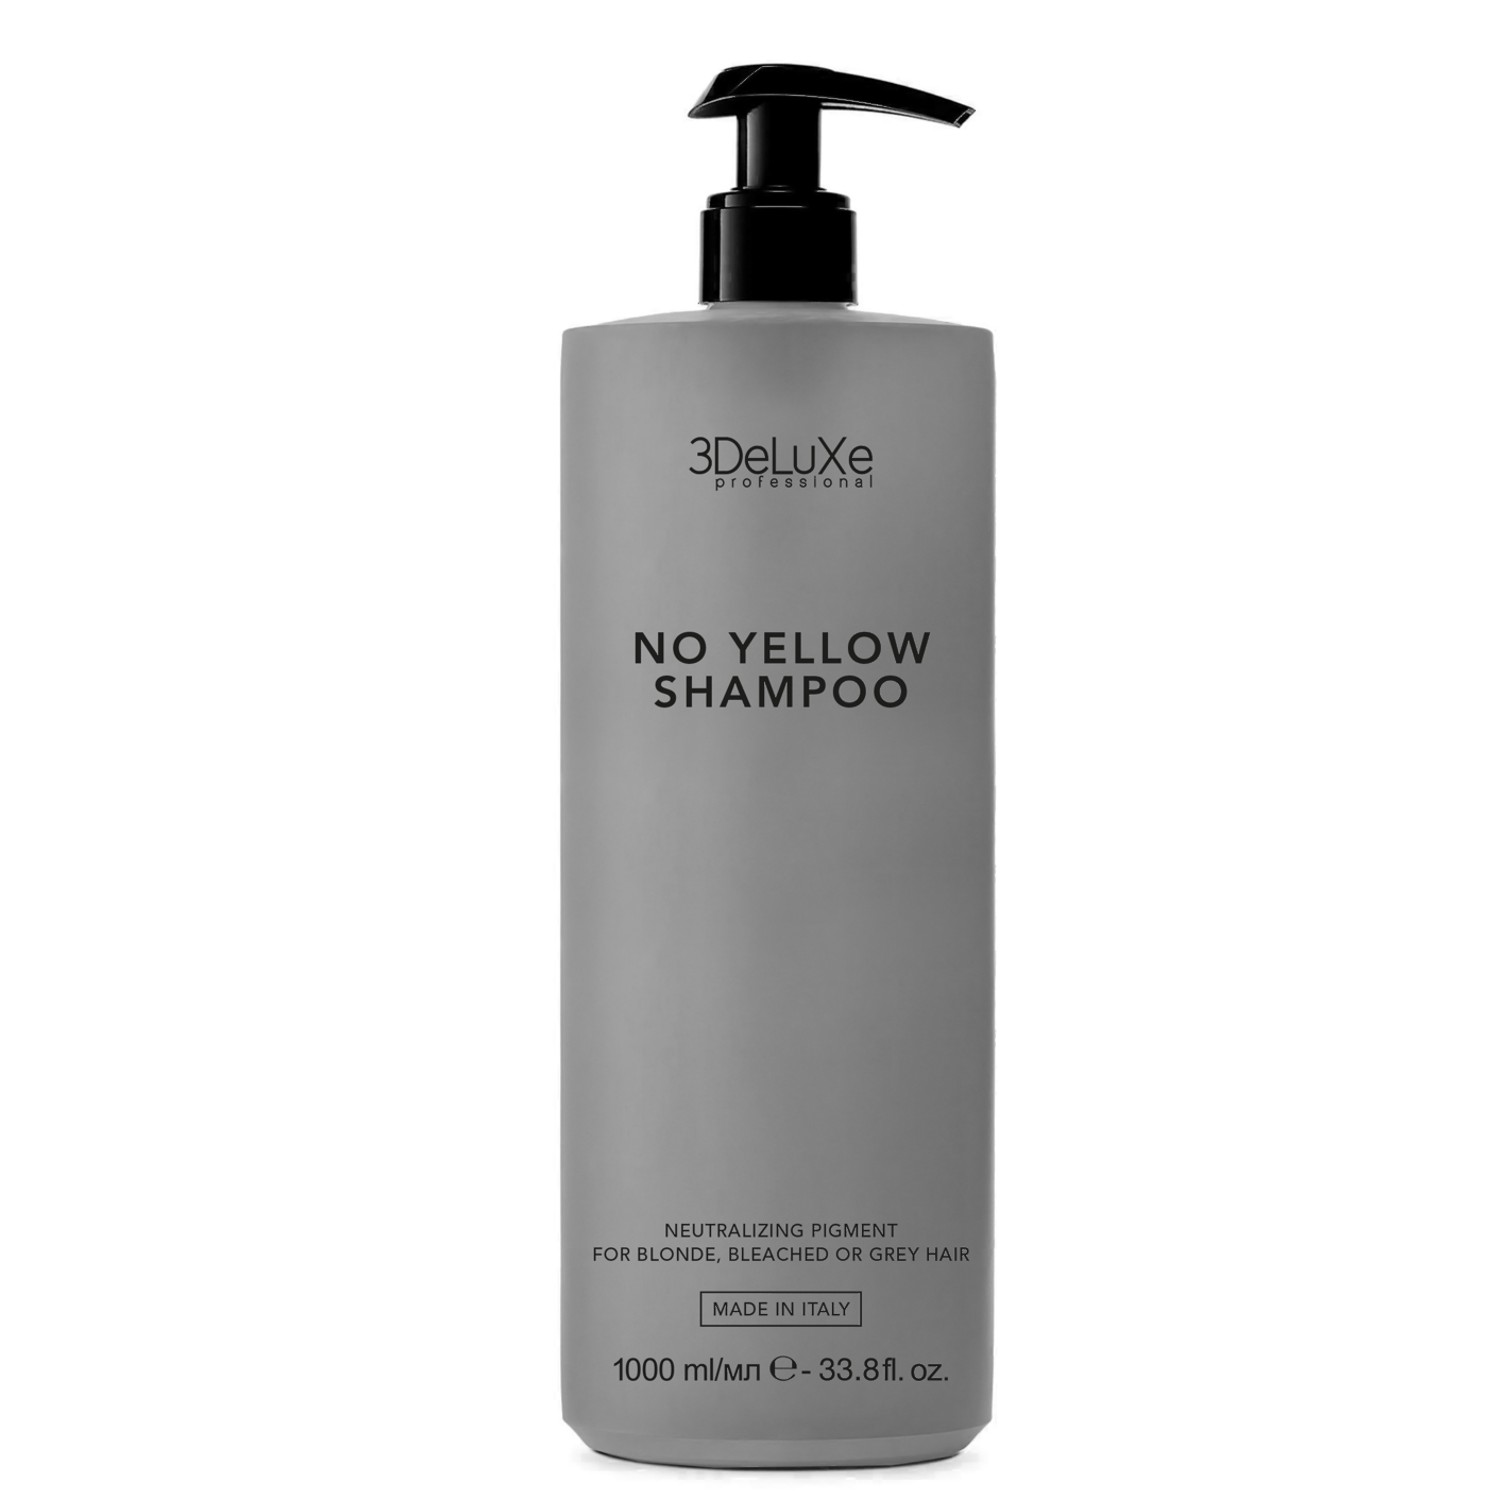 3DeLuXe Professional NO YELLOW Shampoo 1 L